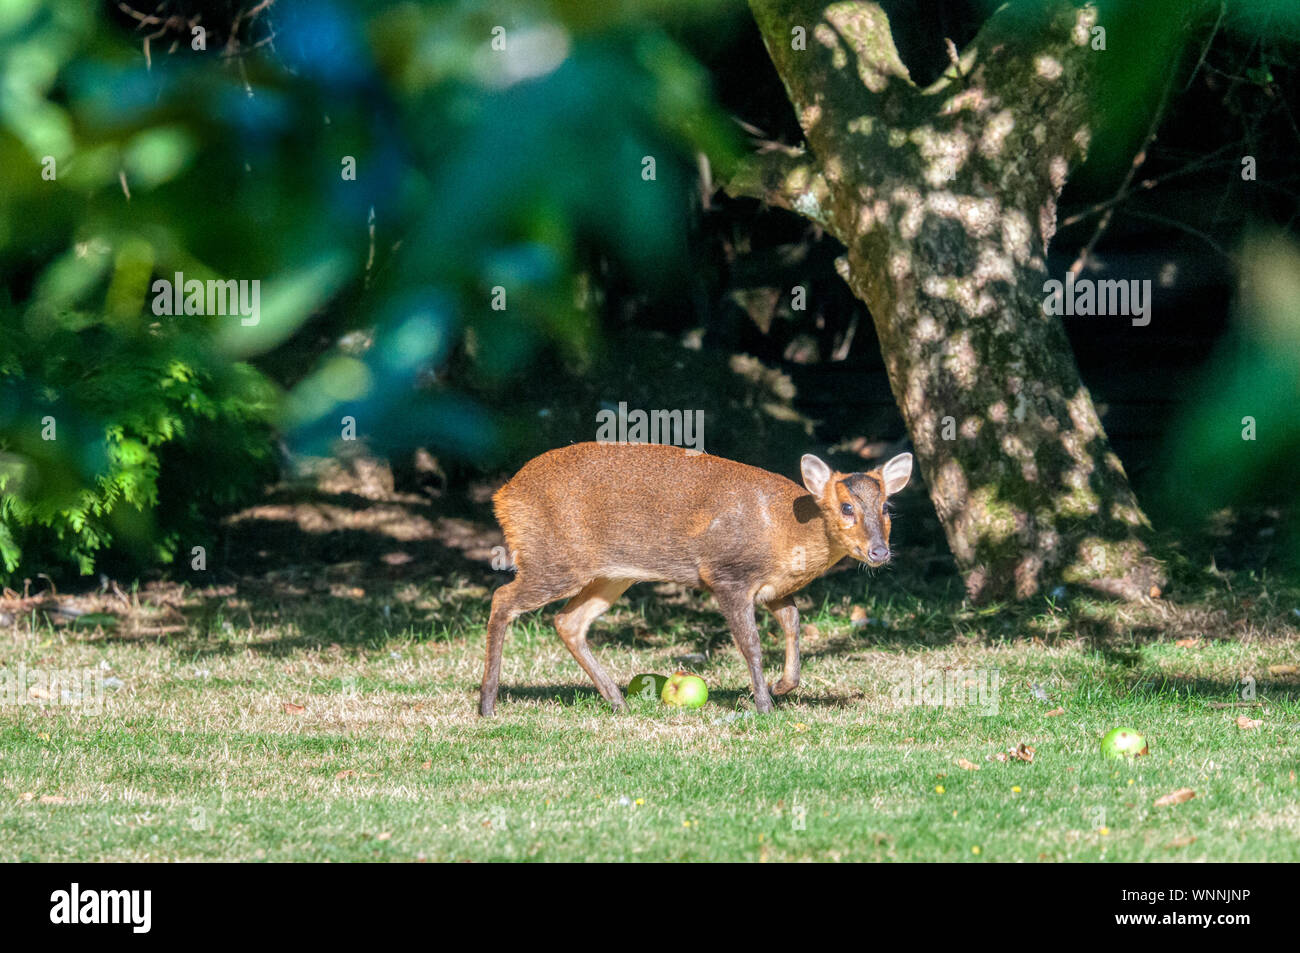 Femmina selvatici muntjac deer, Muntiacus reevesi, mangiare manna mele in un giardino suburbano. Foto Stock